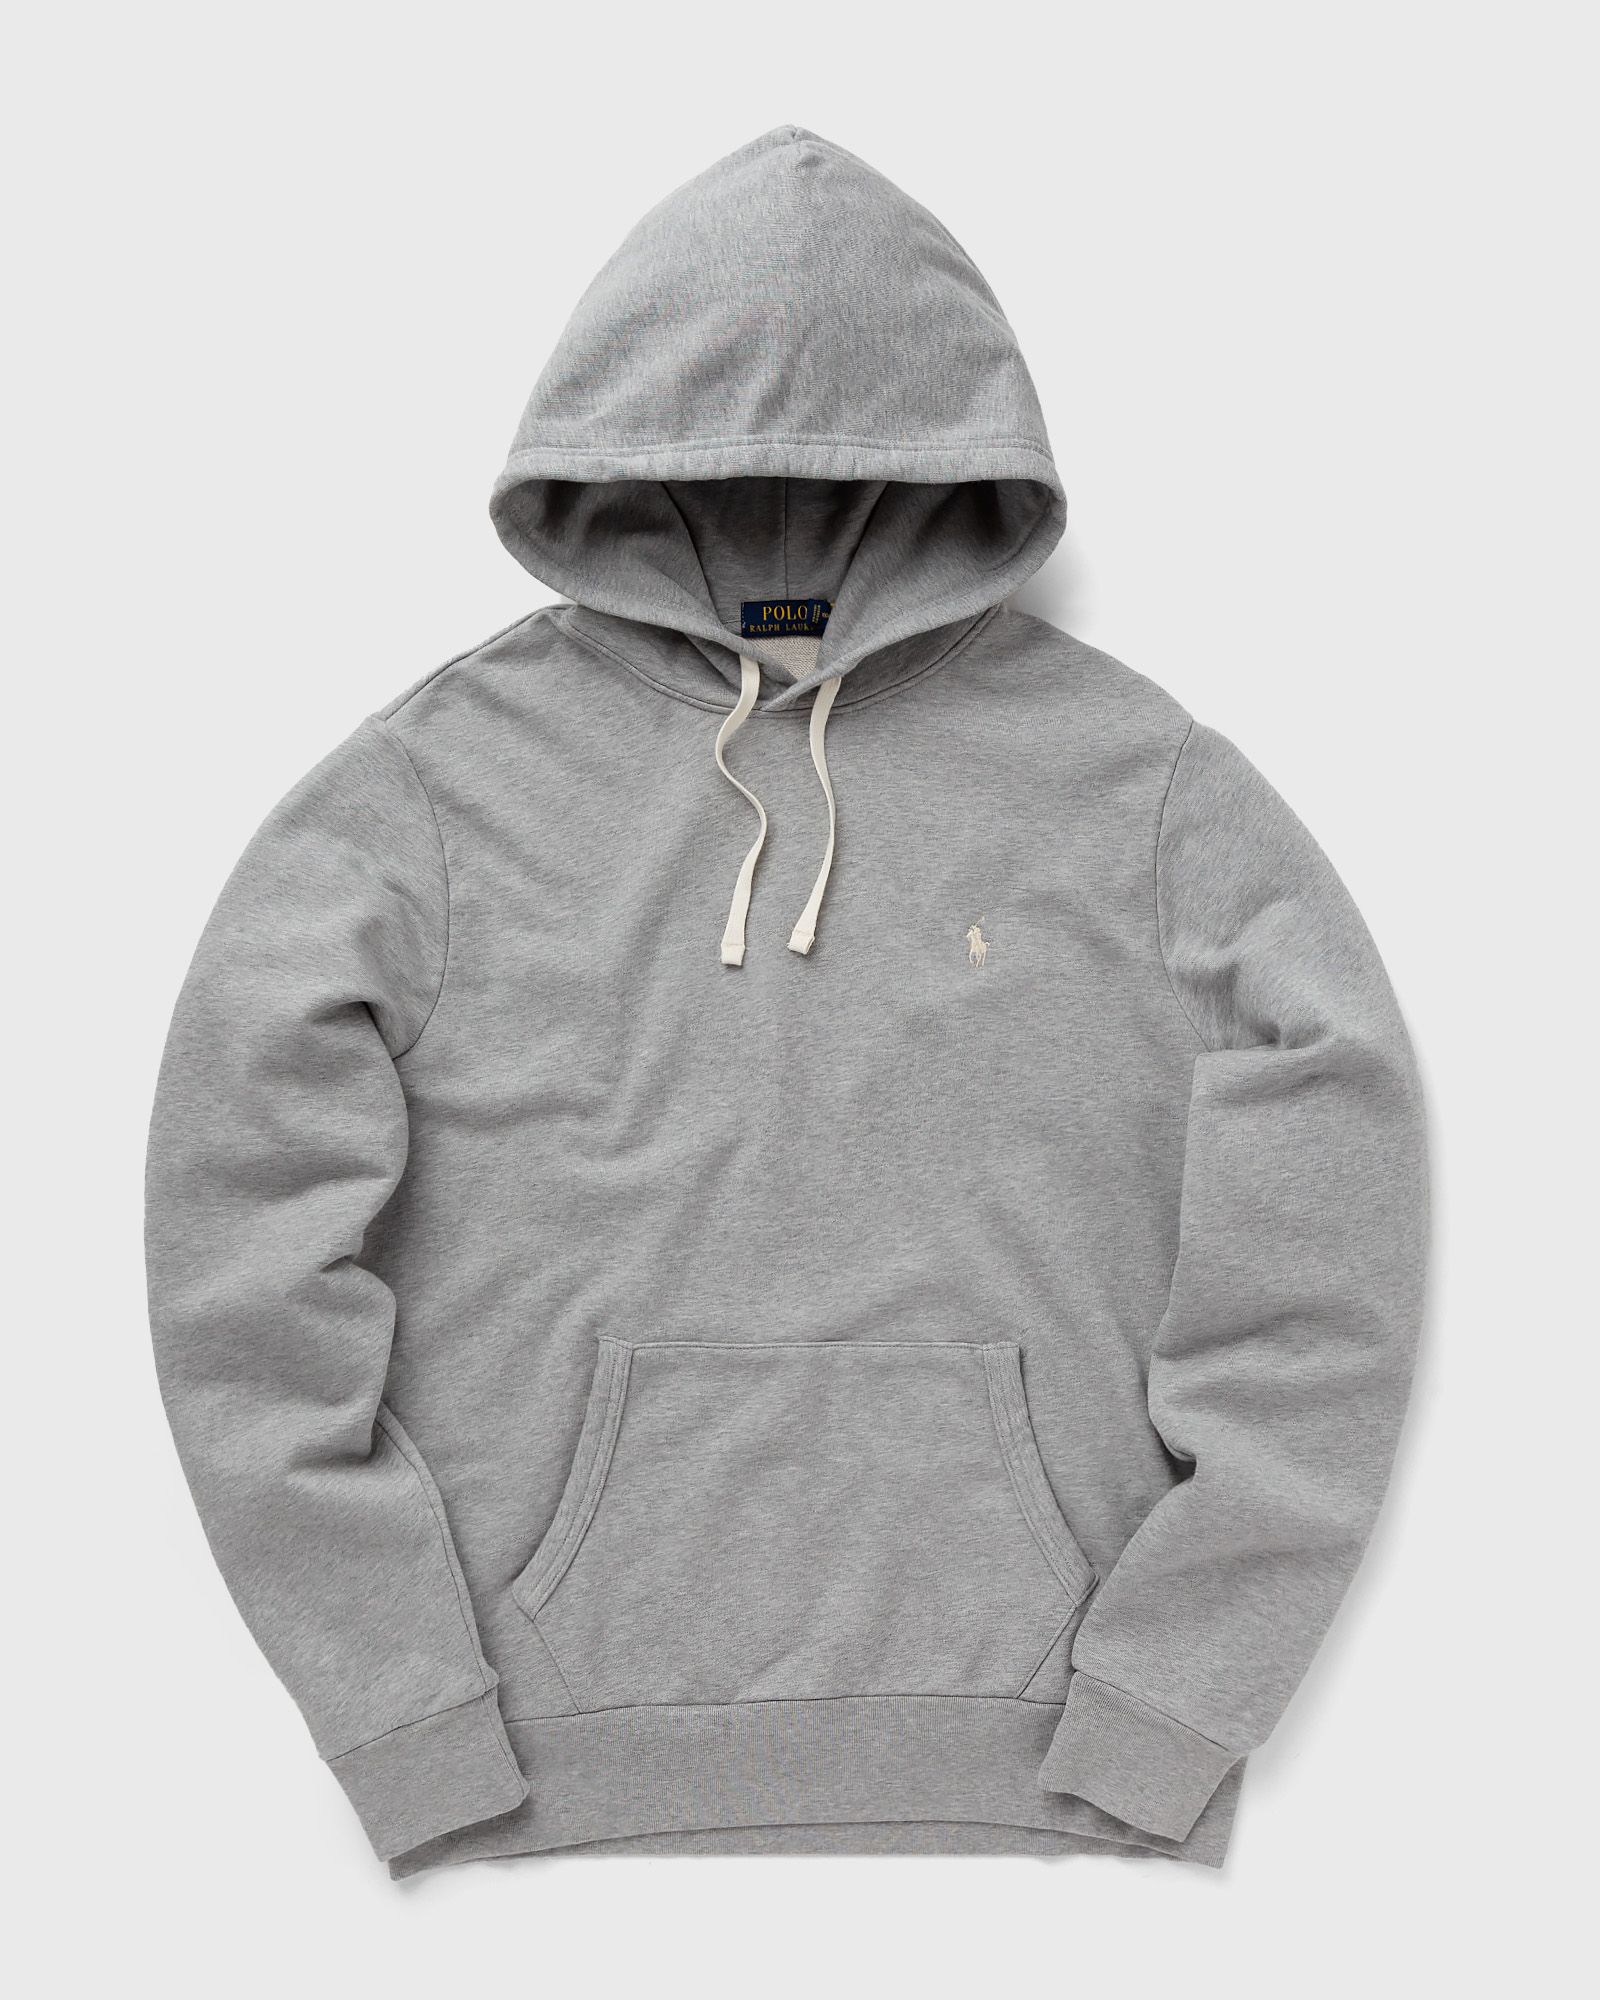 Polo Ralph Lauren - long sleeve-sweatshirt men hoodies grey in größe:xl